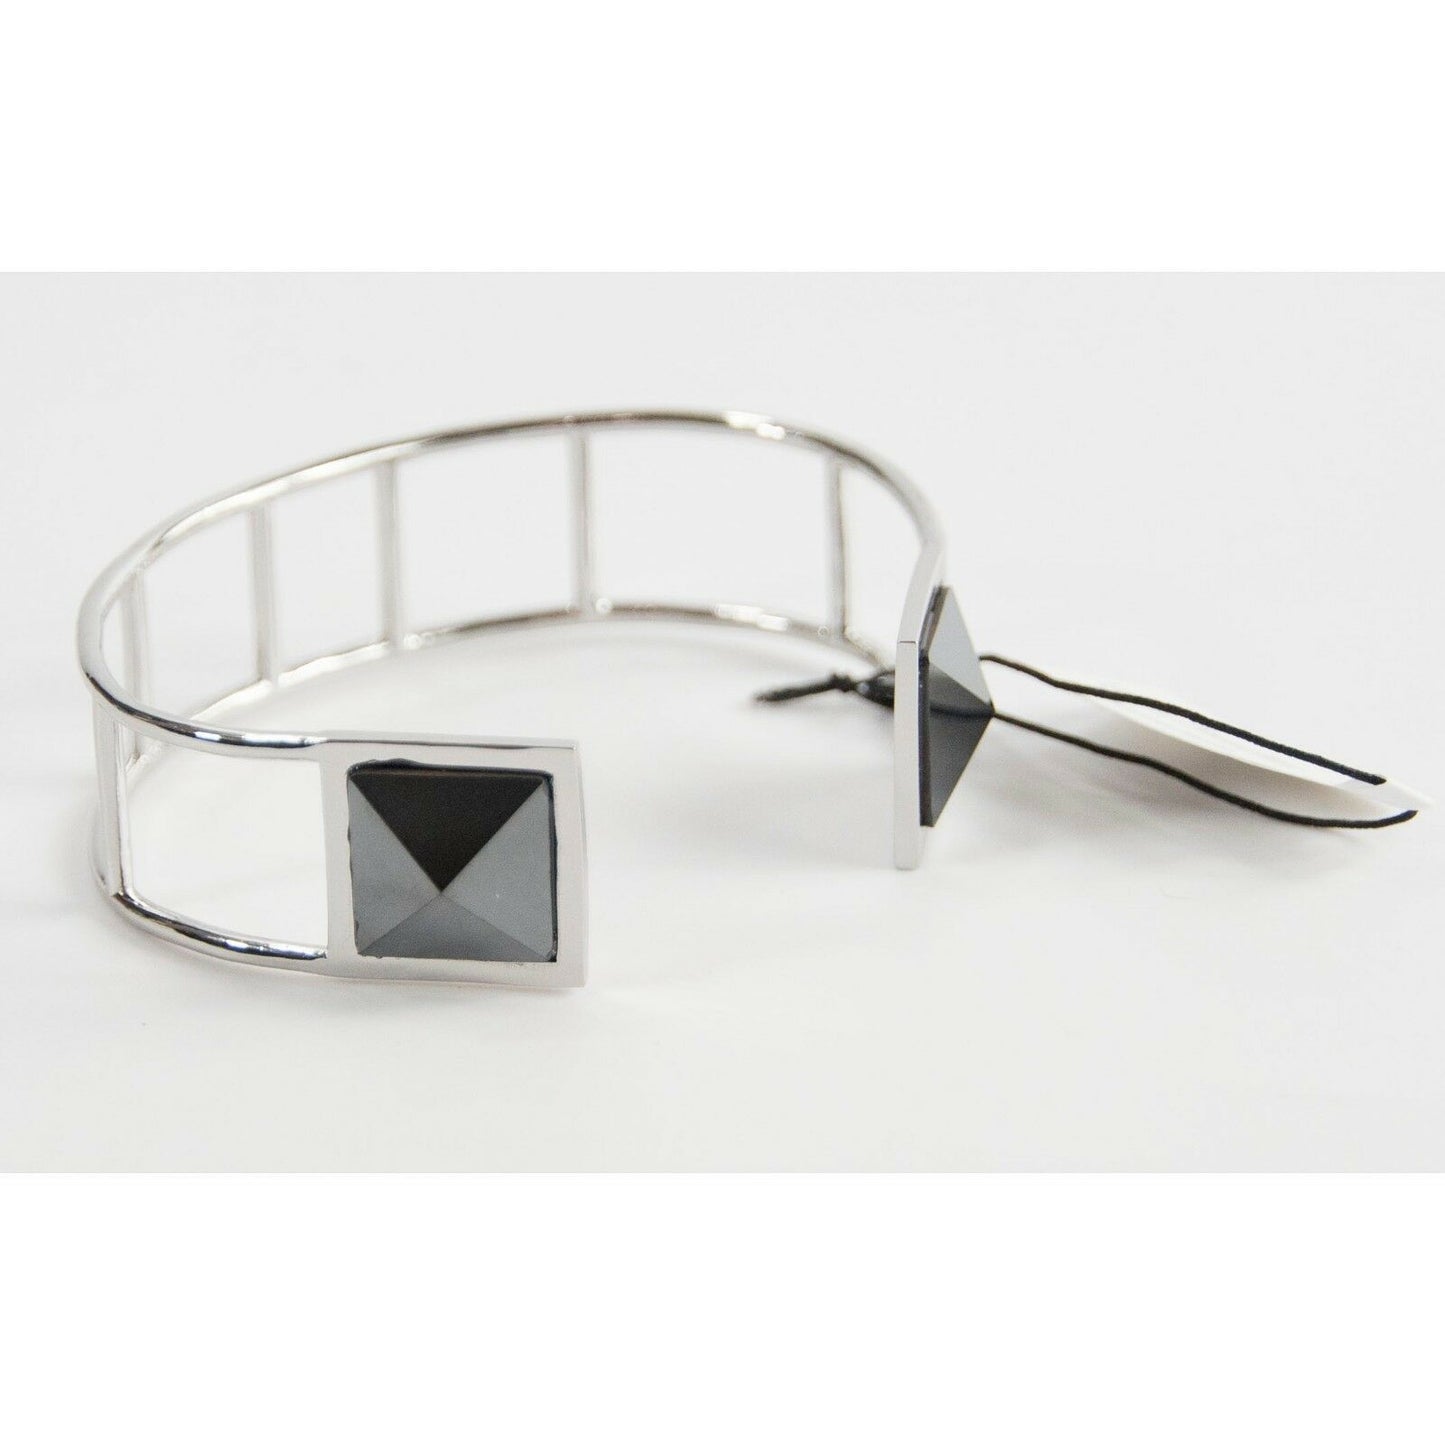 Vera Bradley Silver Hematite Casual Glam Open Cuff Bangle Bracelet NWT